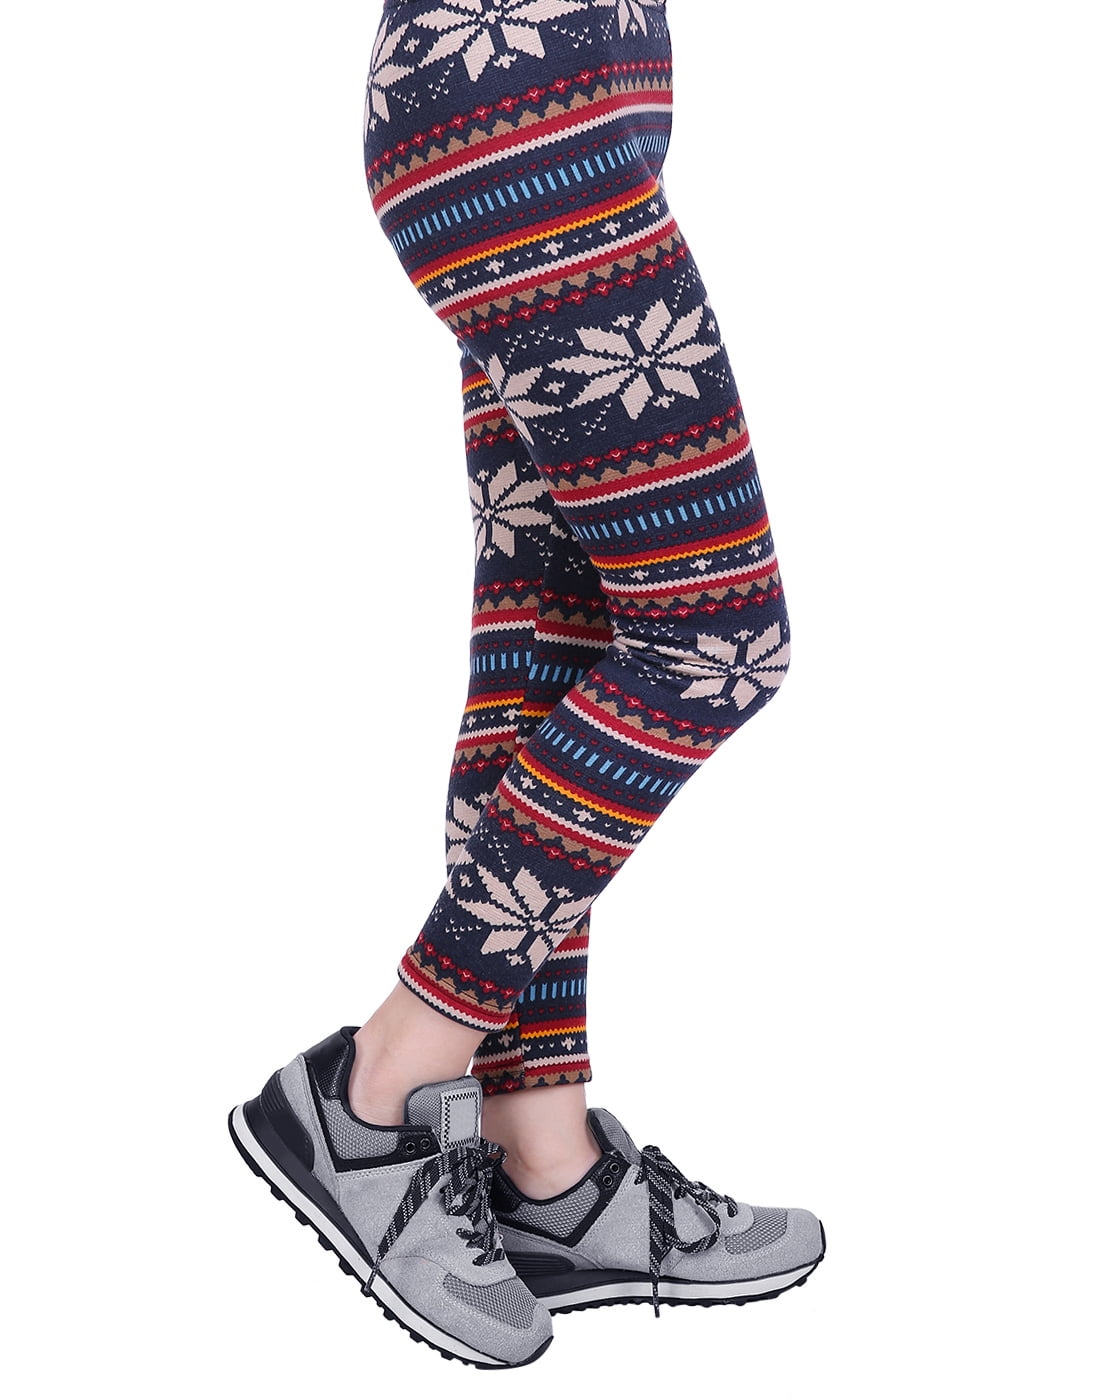 HDE Girls Fleece Winter Knit Leggings Kids Nordic Stretch Pants Footless Tights 